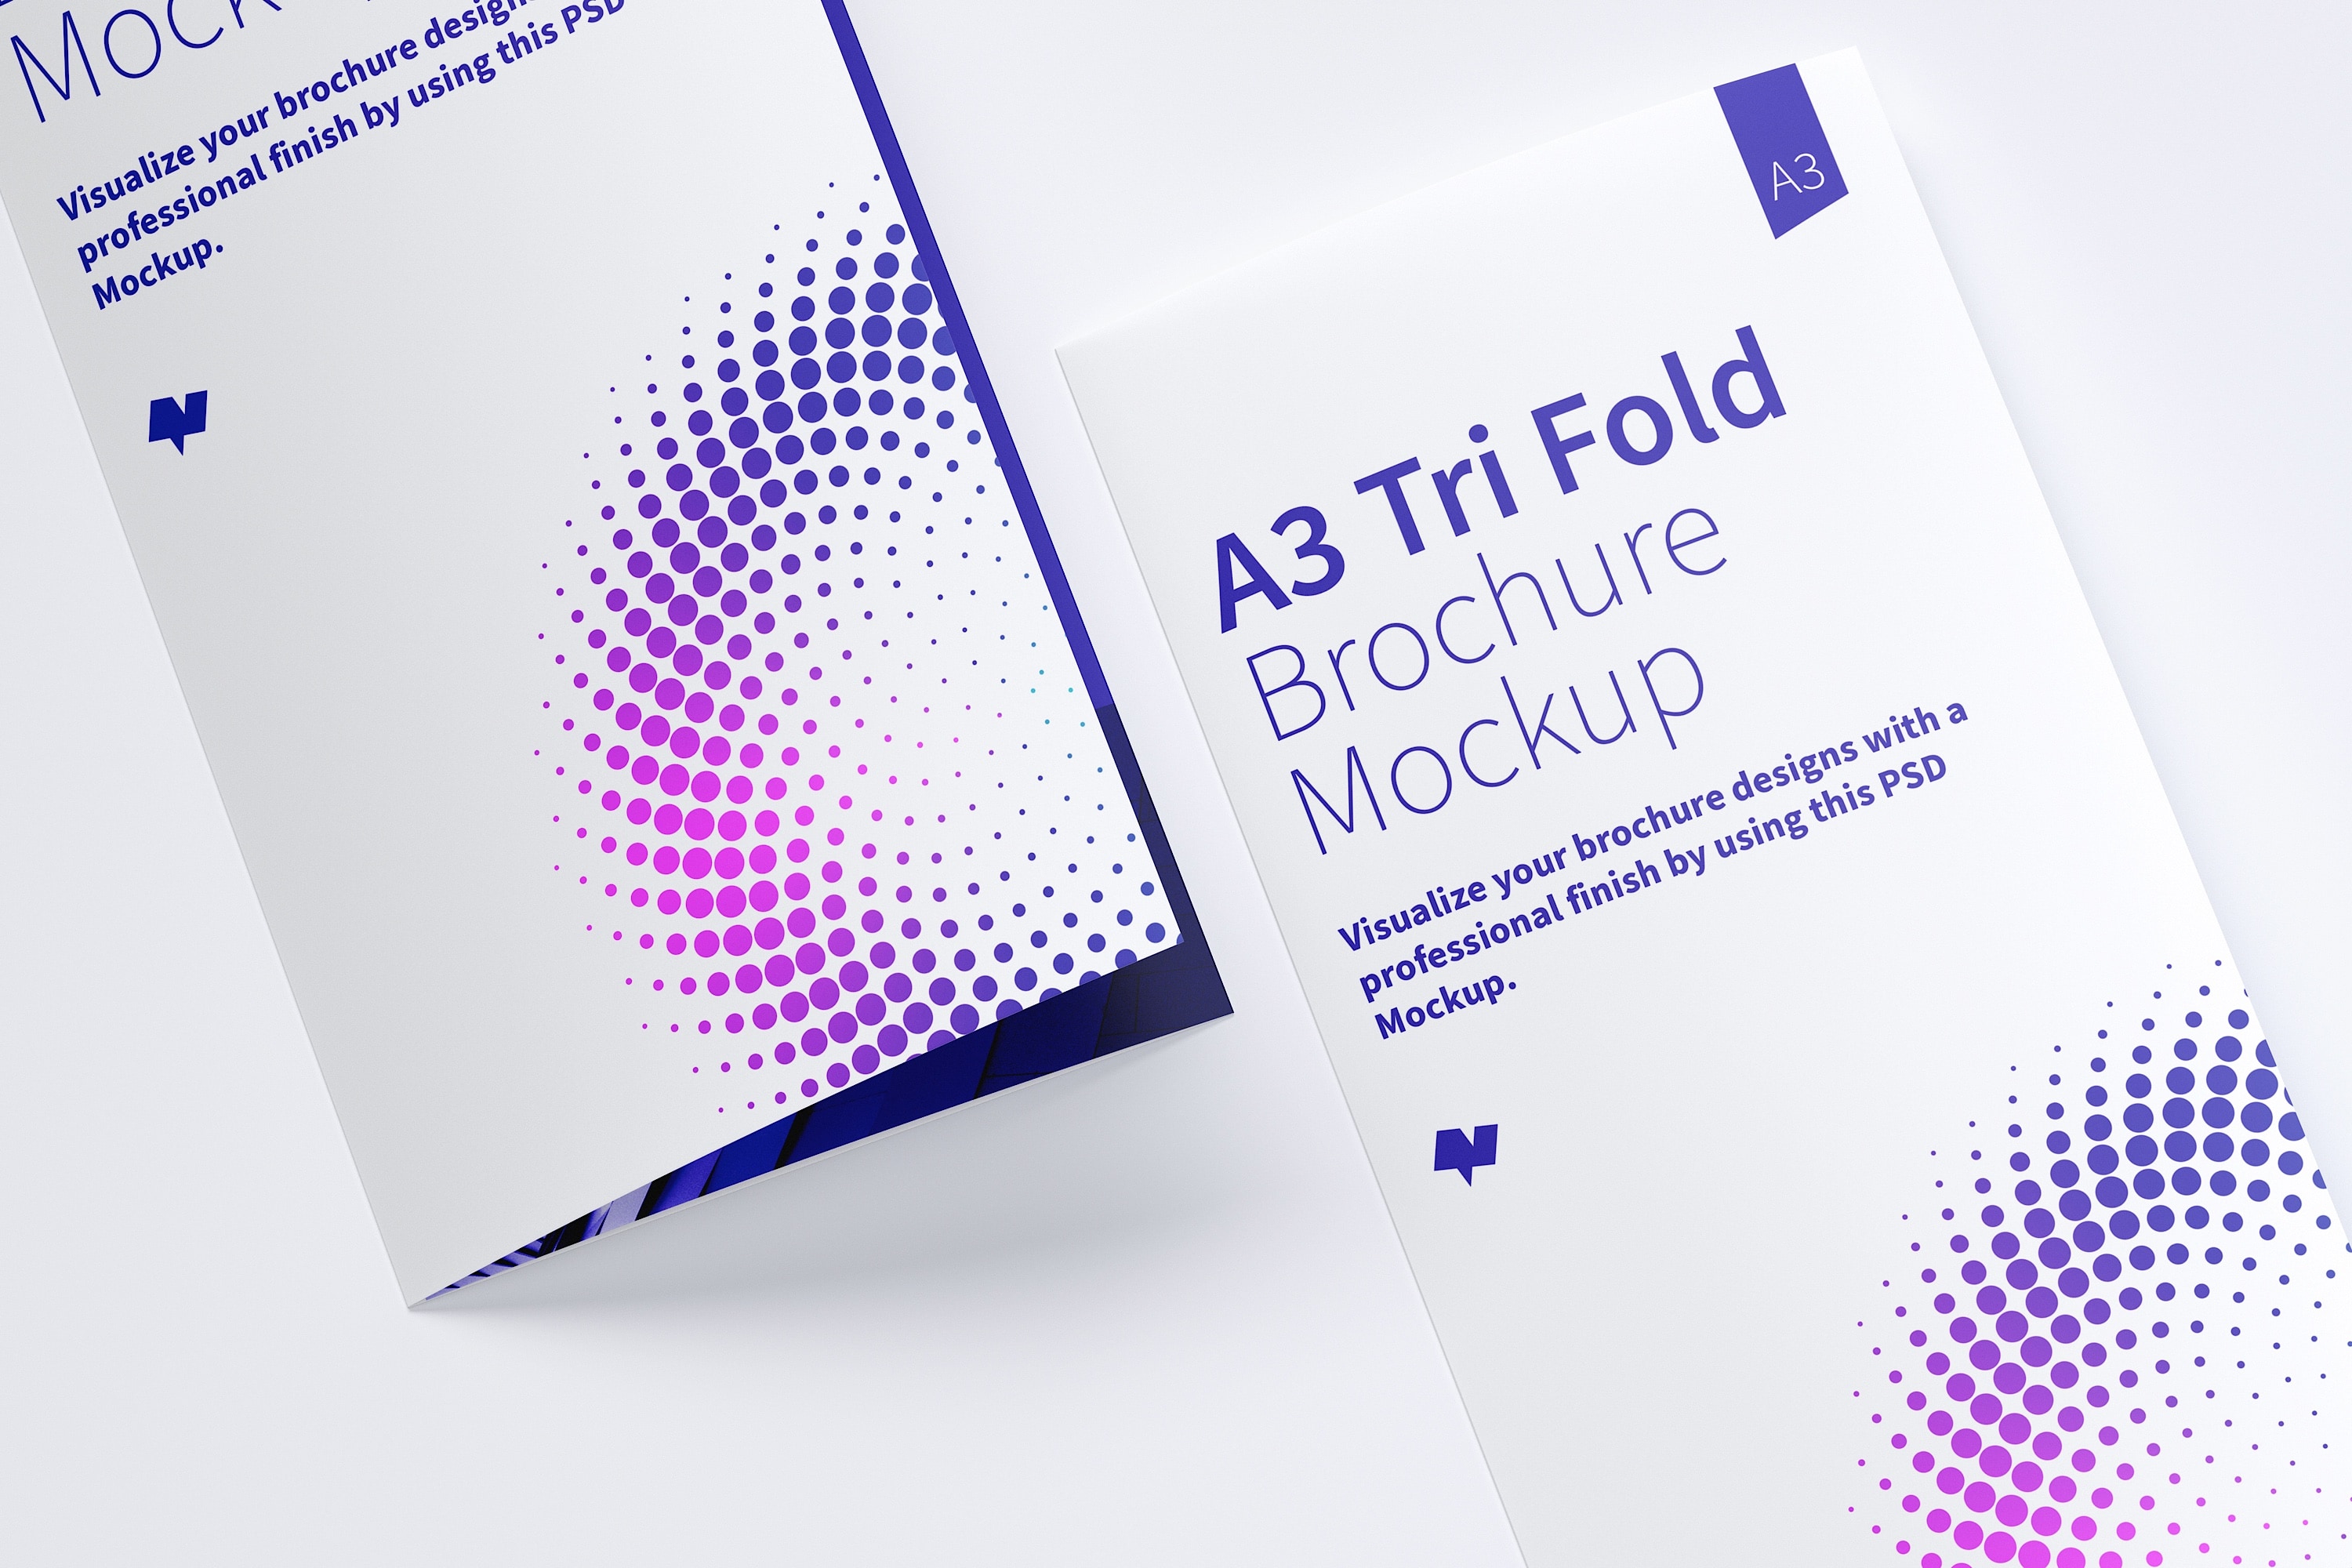 A3尺寸大小三折页传单小册子设计图预览样机05 A3 Trifold Brochure Mockup 05插图1